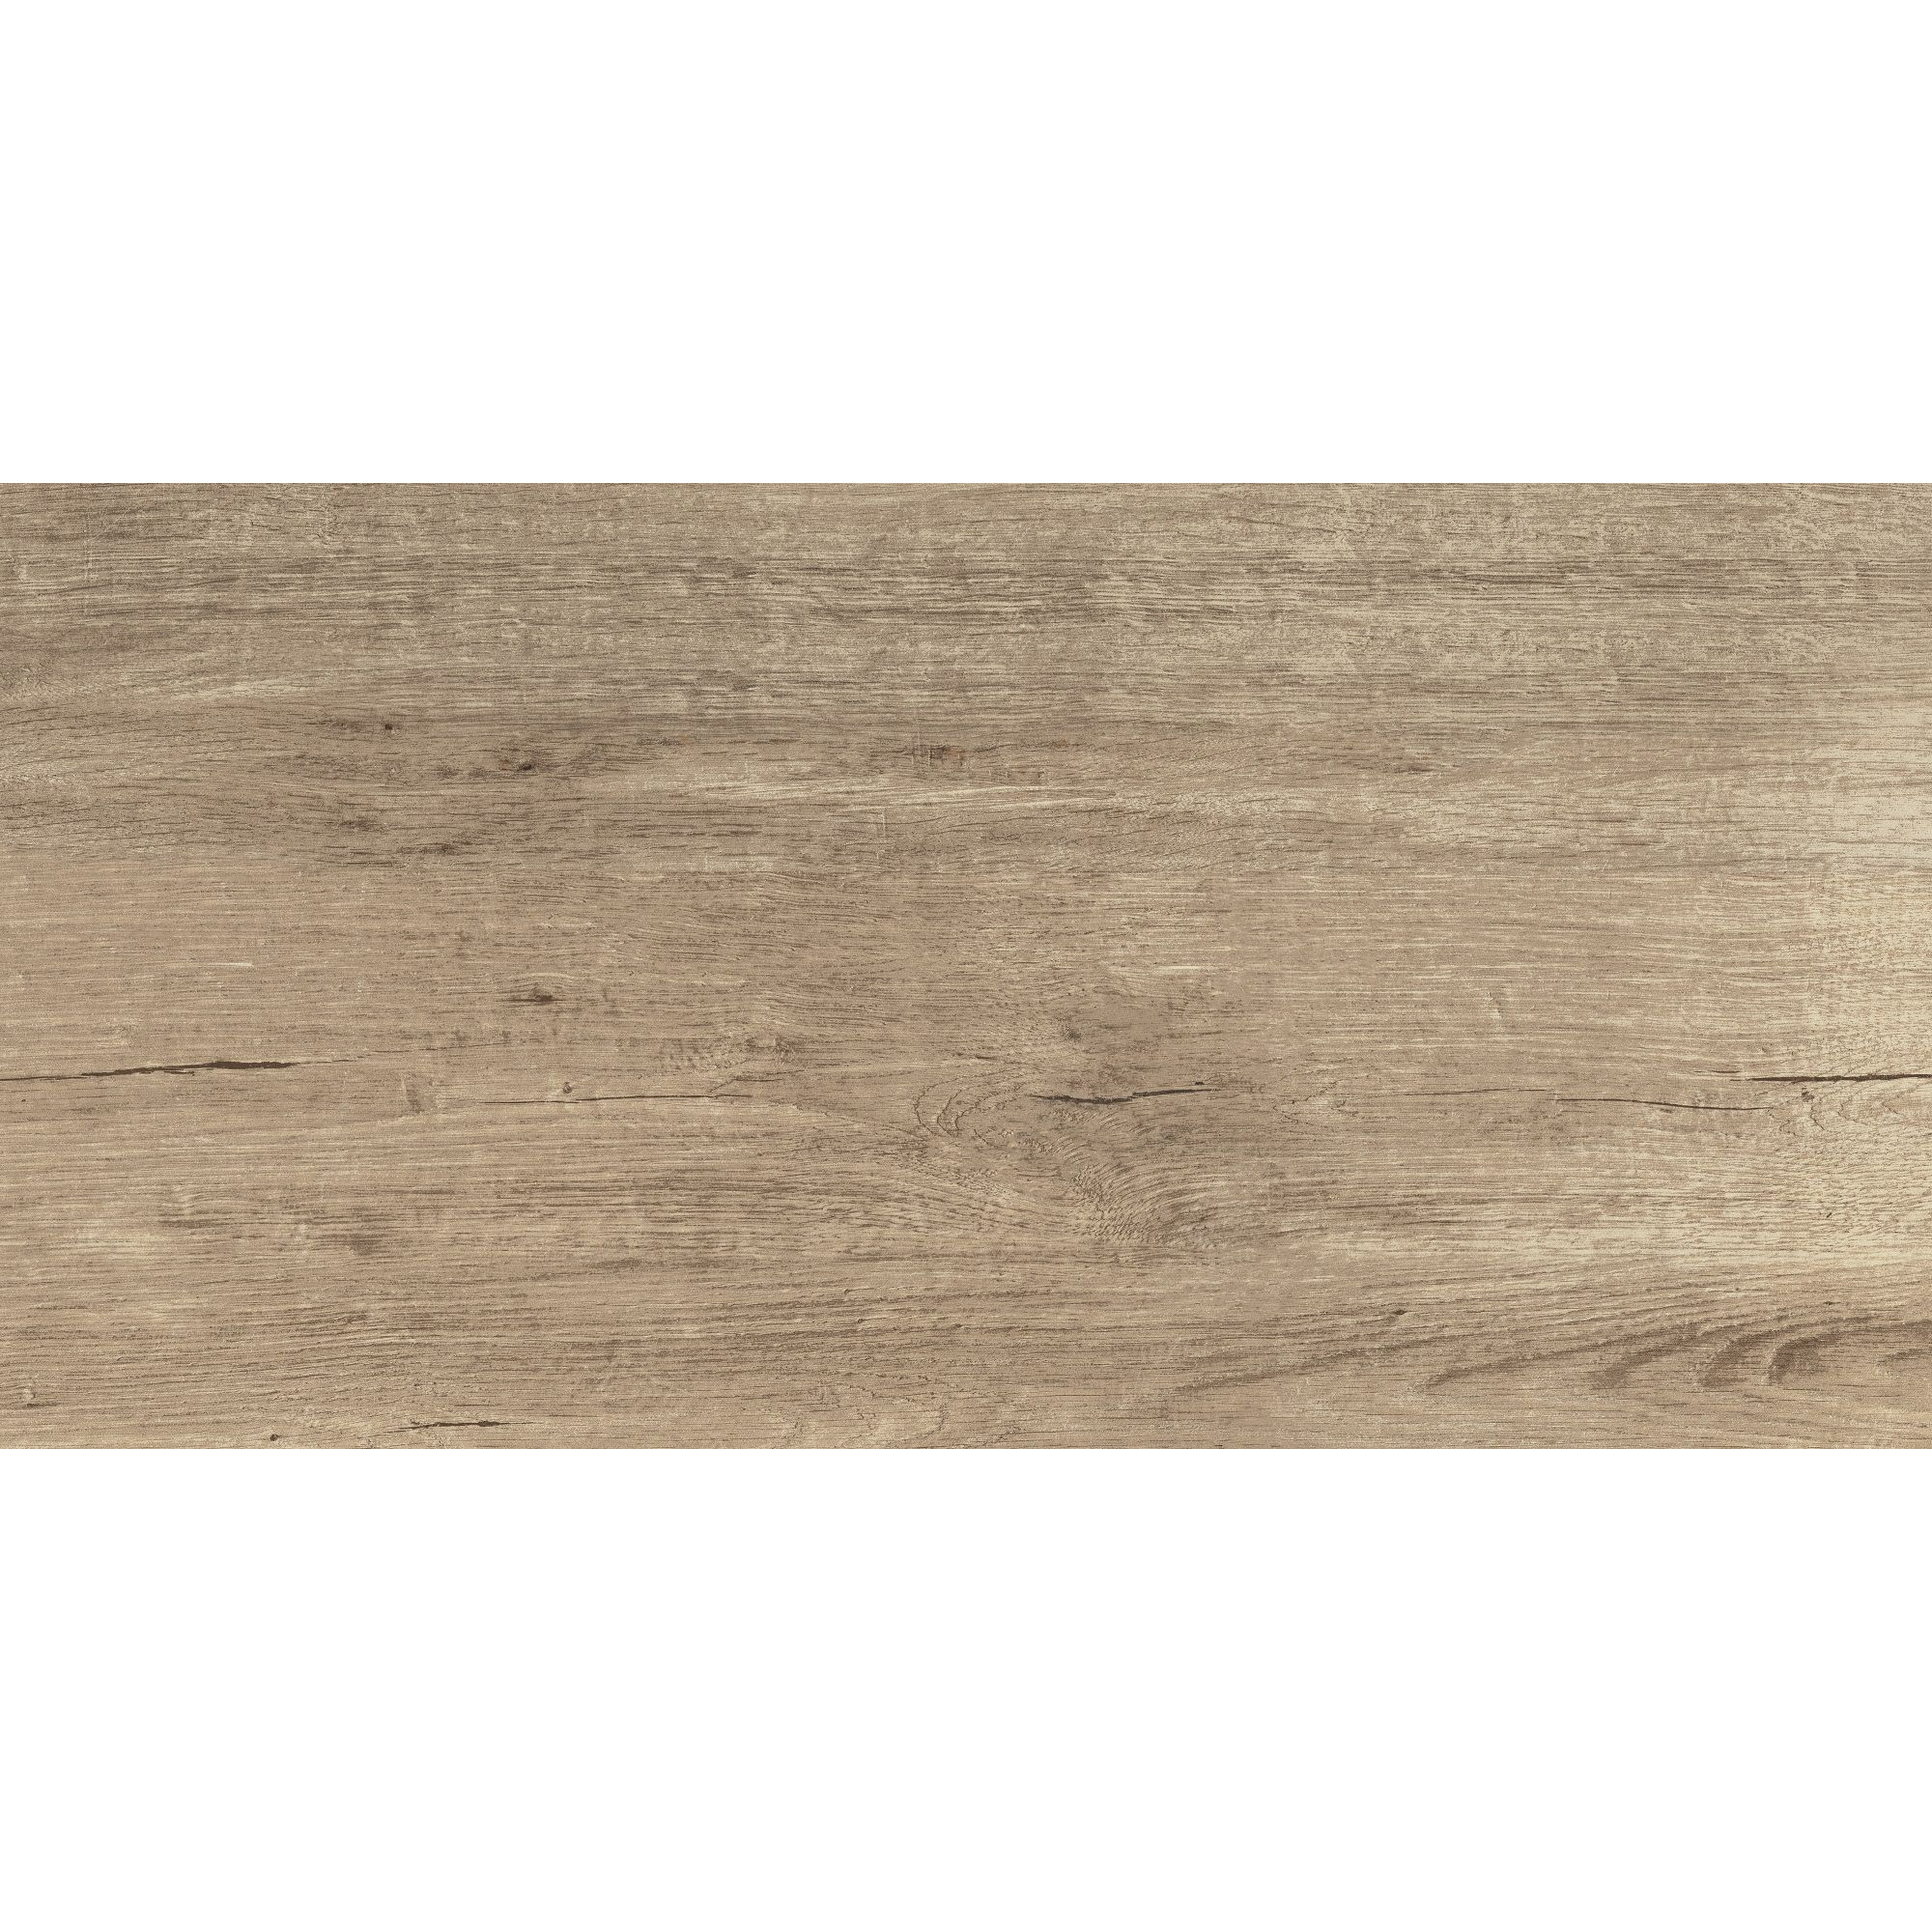 Bodenfliese 'Timber' Feinsteinzeug braun 30,5 x 61 cm + product picture